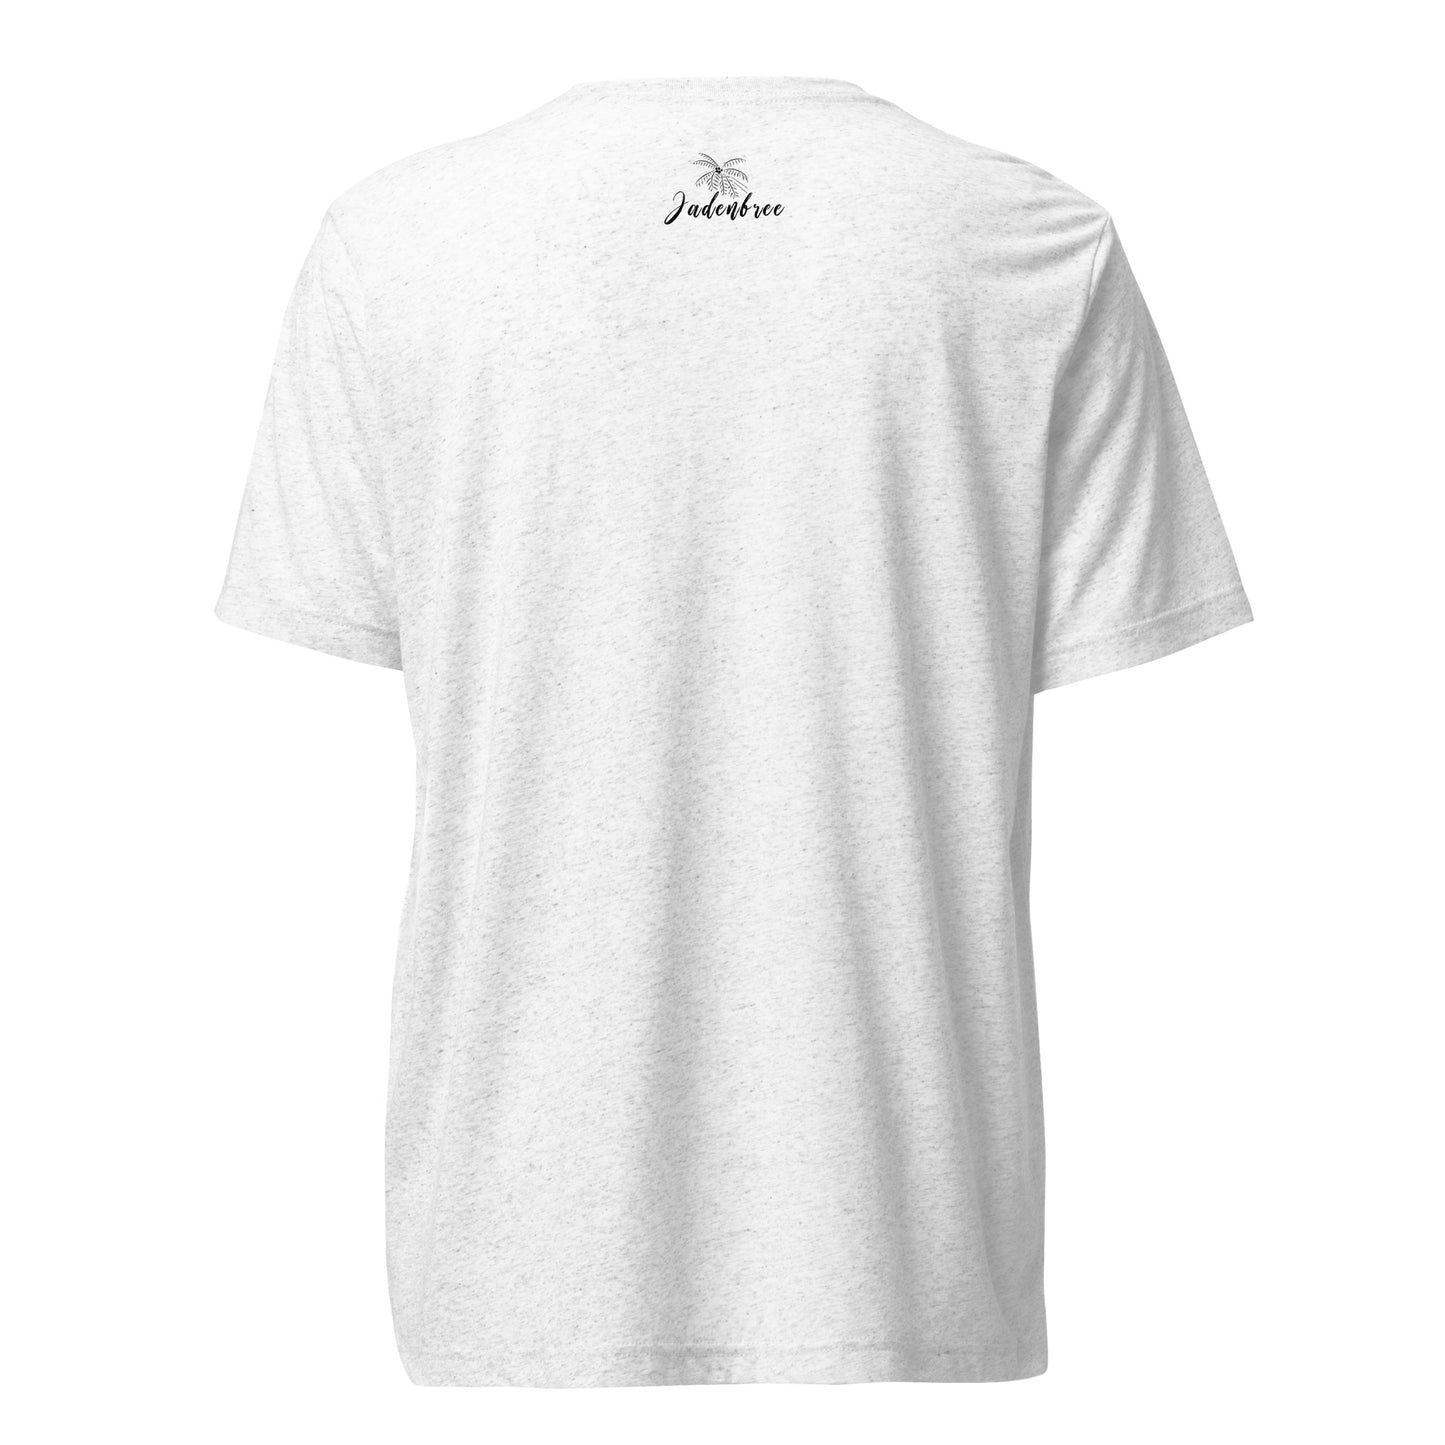 Flip-Flops Paradise Embroidered Unisex T-Shirt